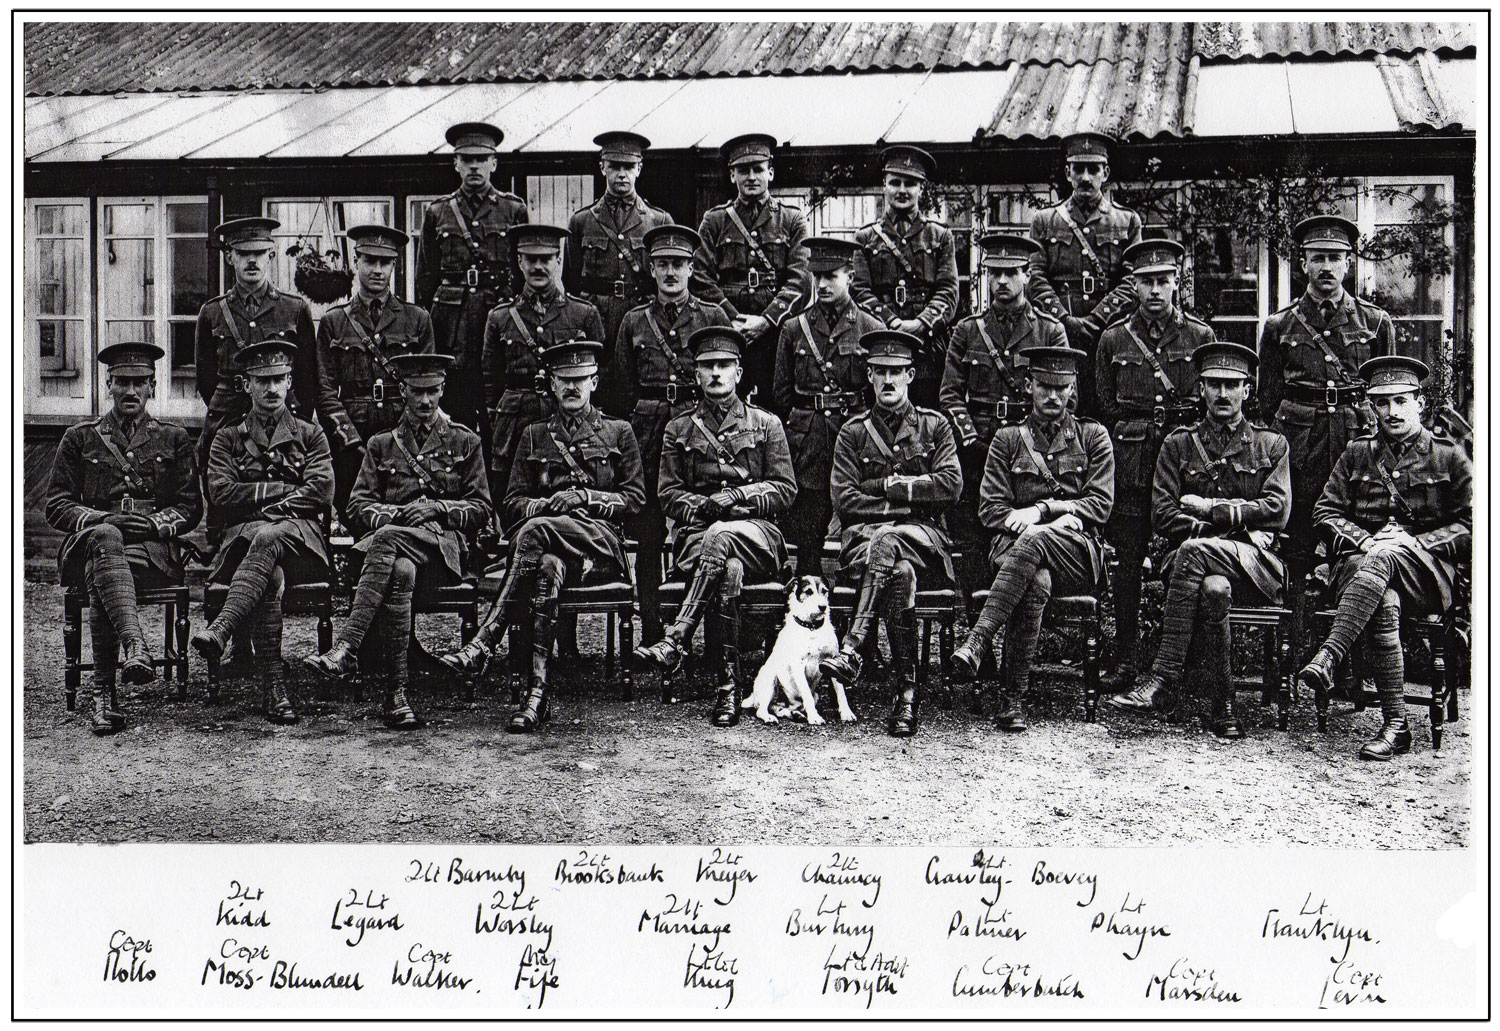 images/people/Hugh_Carlton_Cumberbatch_1884-1936/2nd-battalion-officers-1913-hugh-carlton-cumberbatch